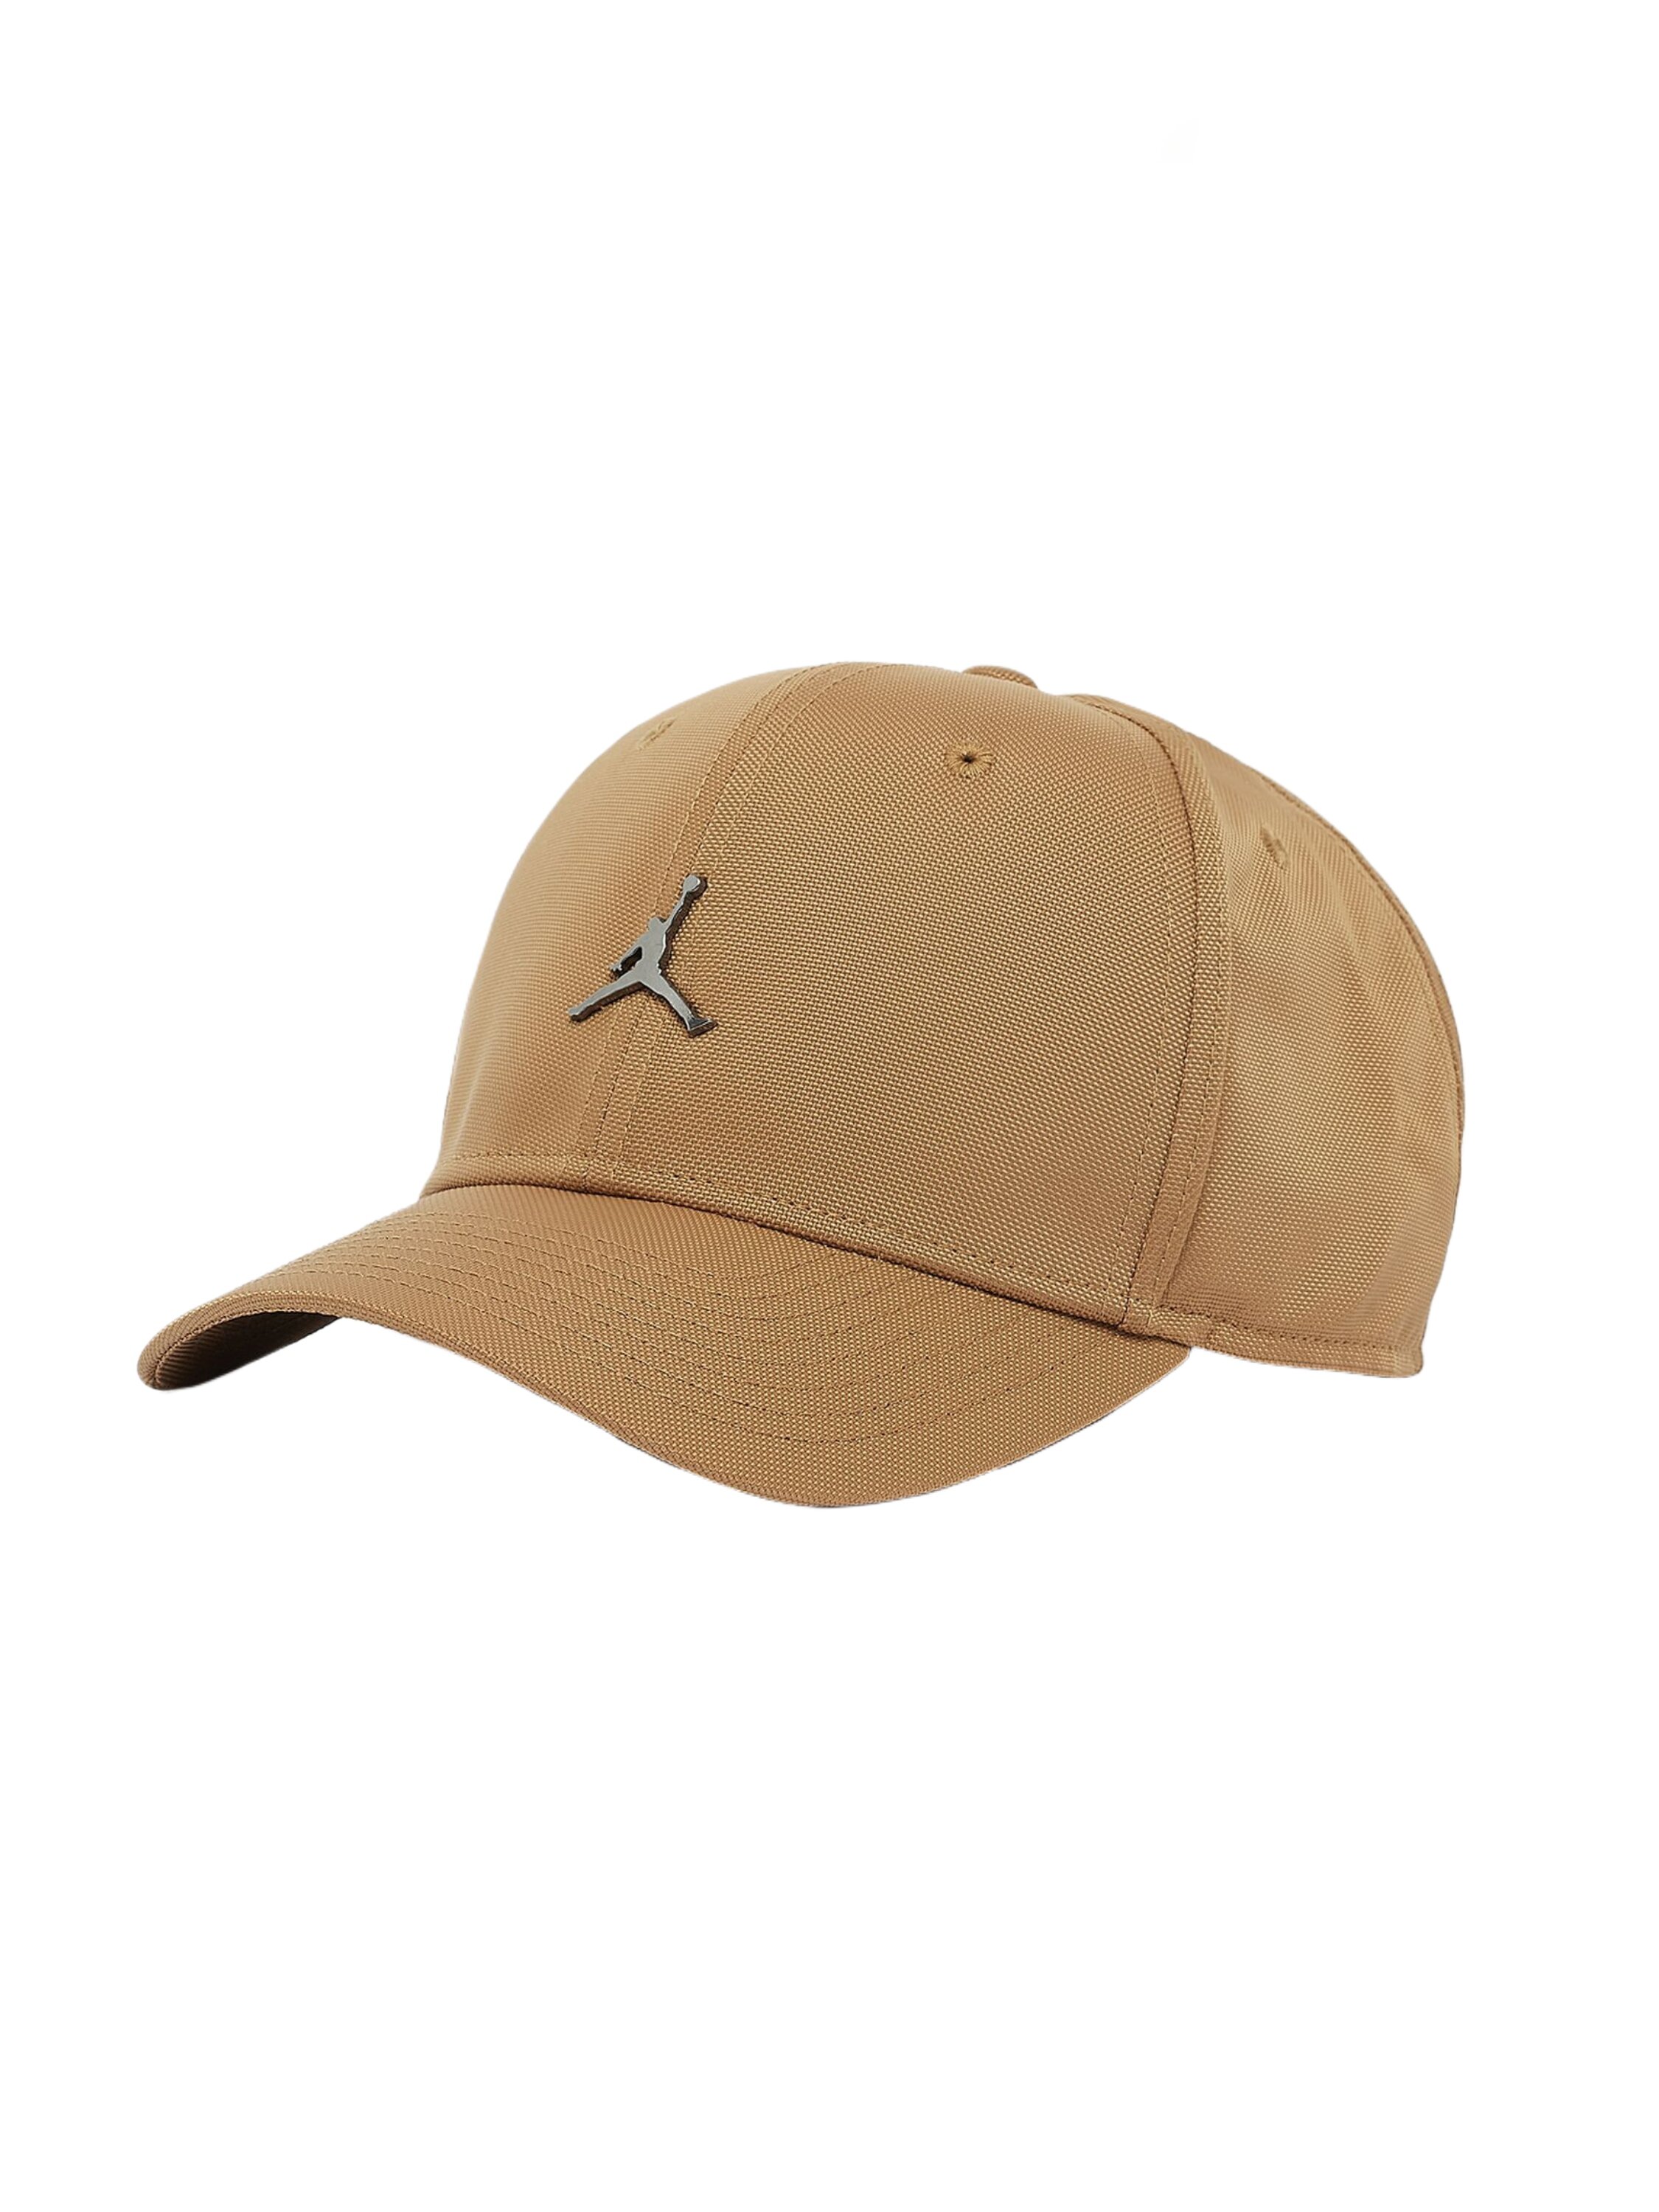 Бейсболка унисекс Nike Jordan Rise Cap Adjustable Hat коричневая, р. M/L